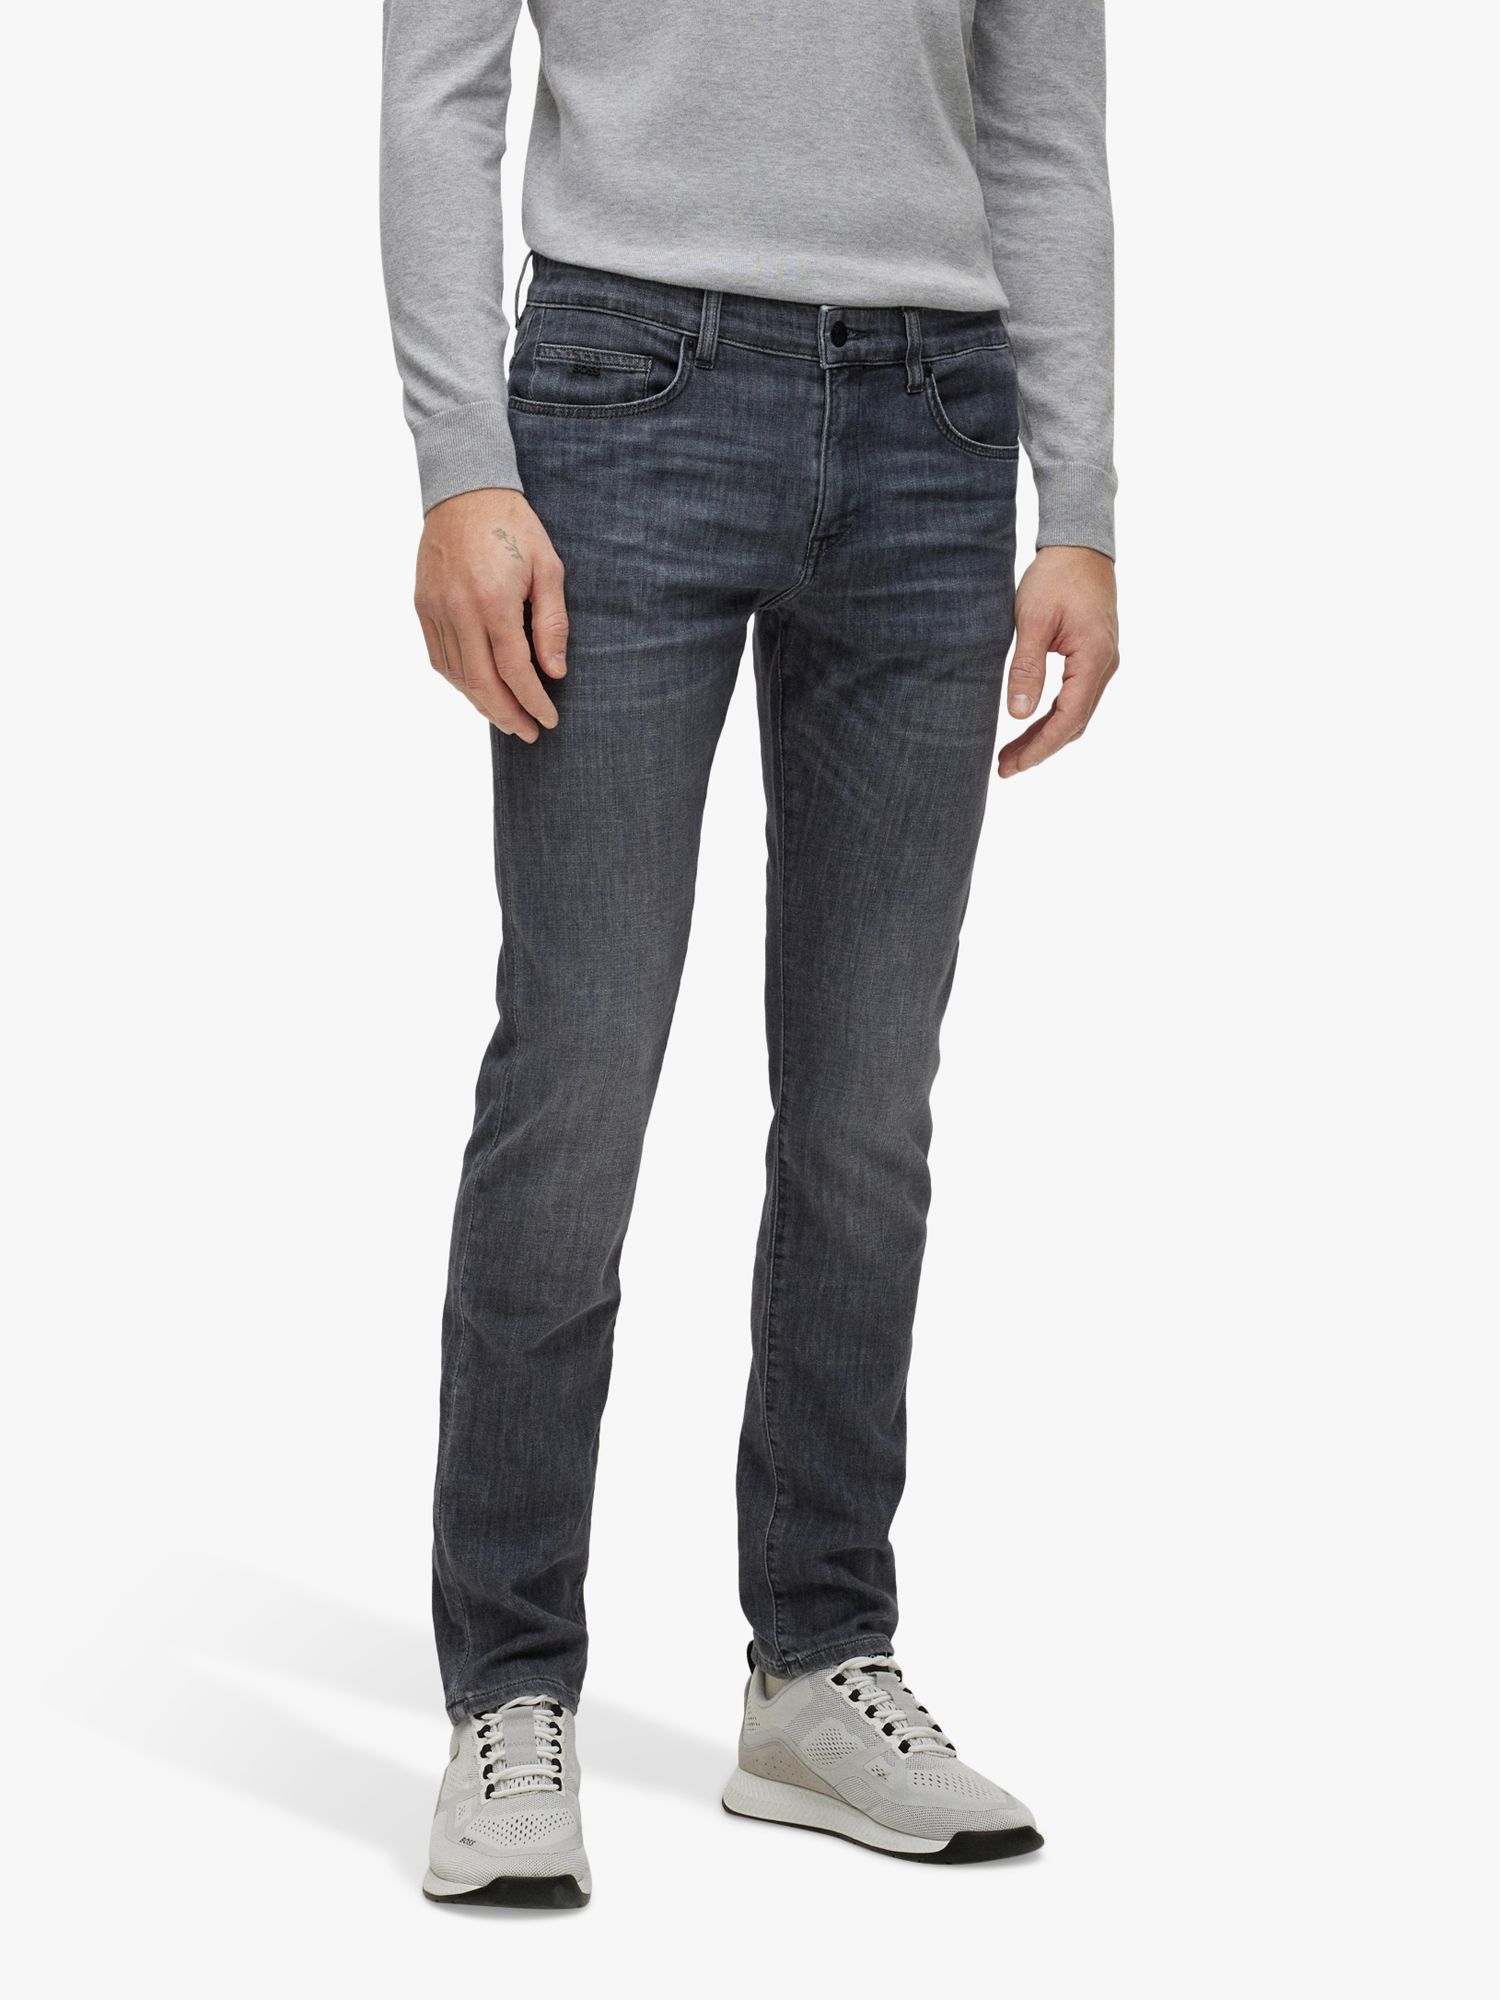 Møde desillusion rookie BOSS Delaware Slim Fit Jeans, Medium Grey at John Lewis & Partners